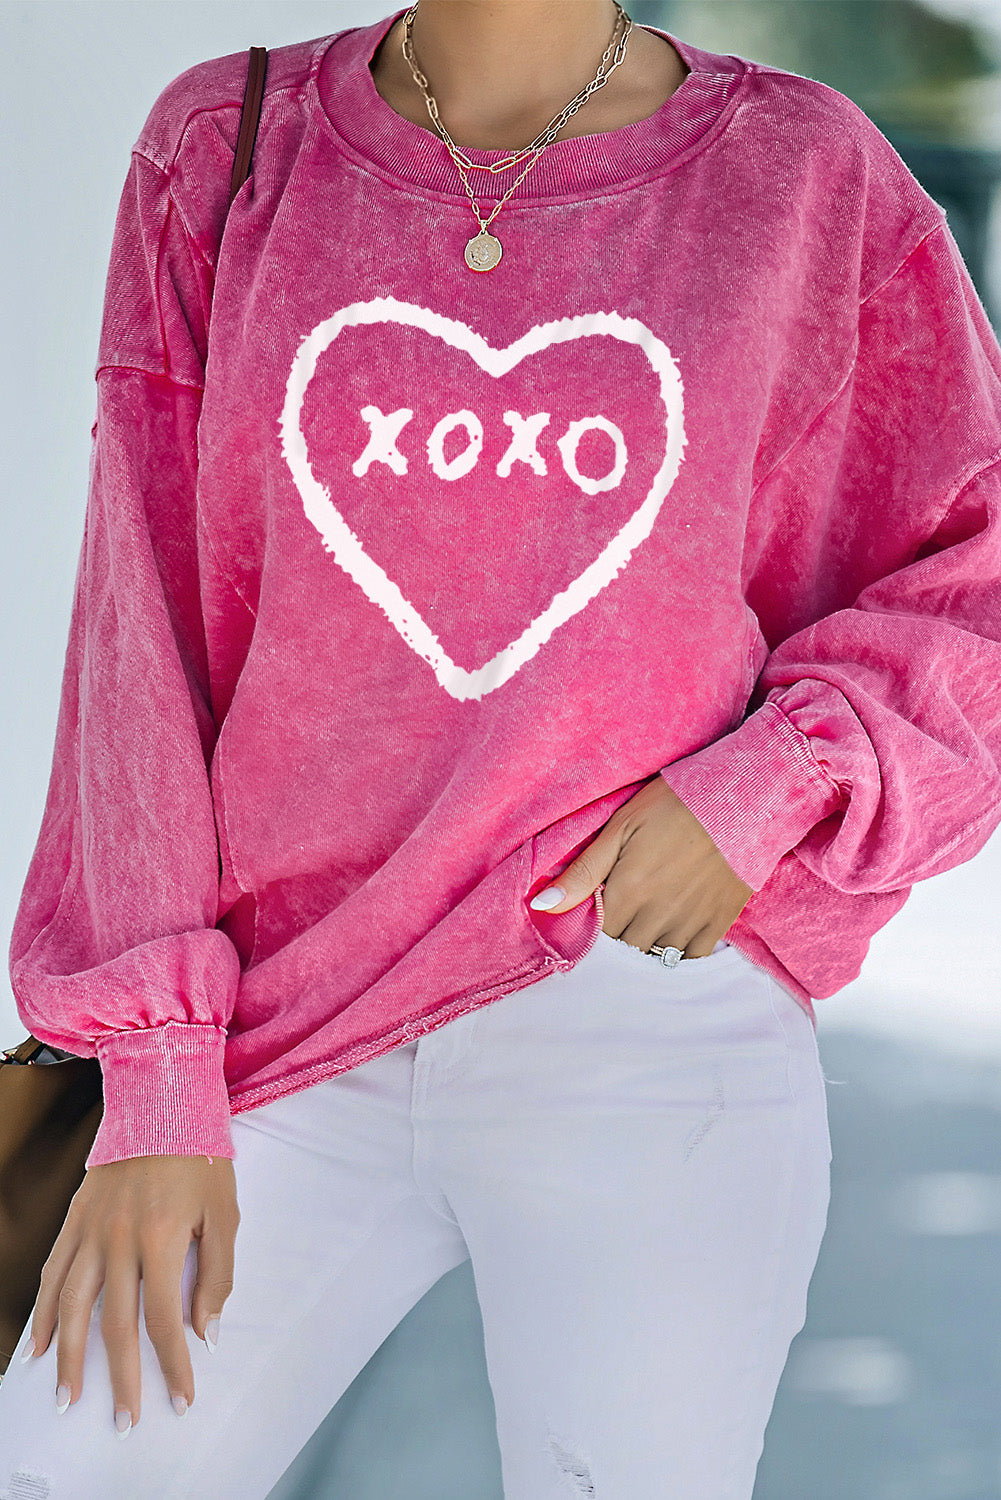 Rose XOXO Heart Shaped Glitter Print Patchwork Pullover Sweatshirt - US2EInc Apparel Plug Ltd. Co